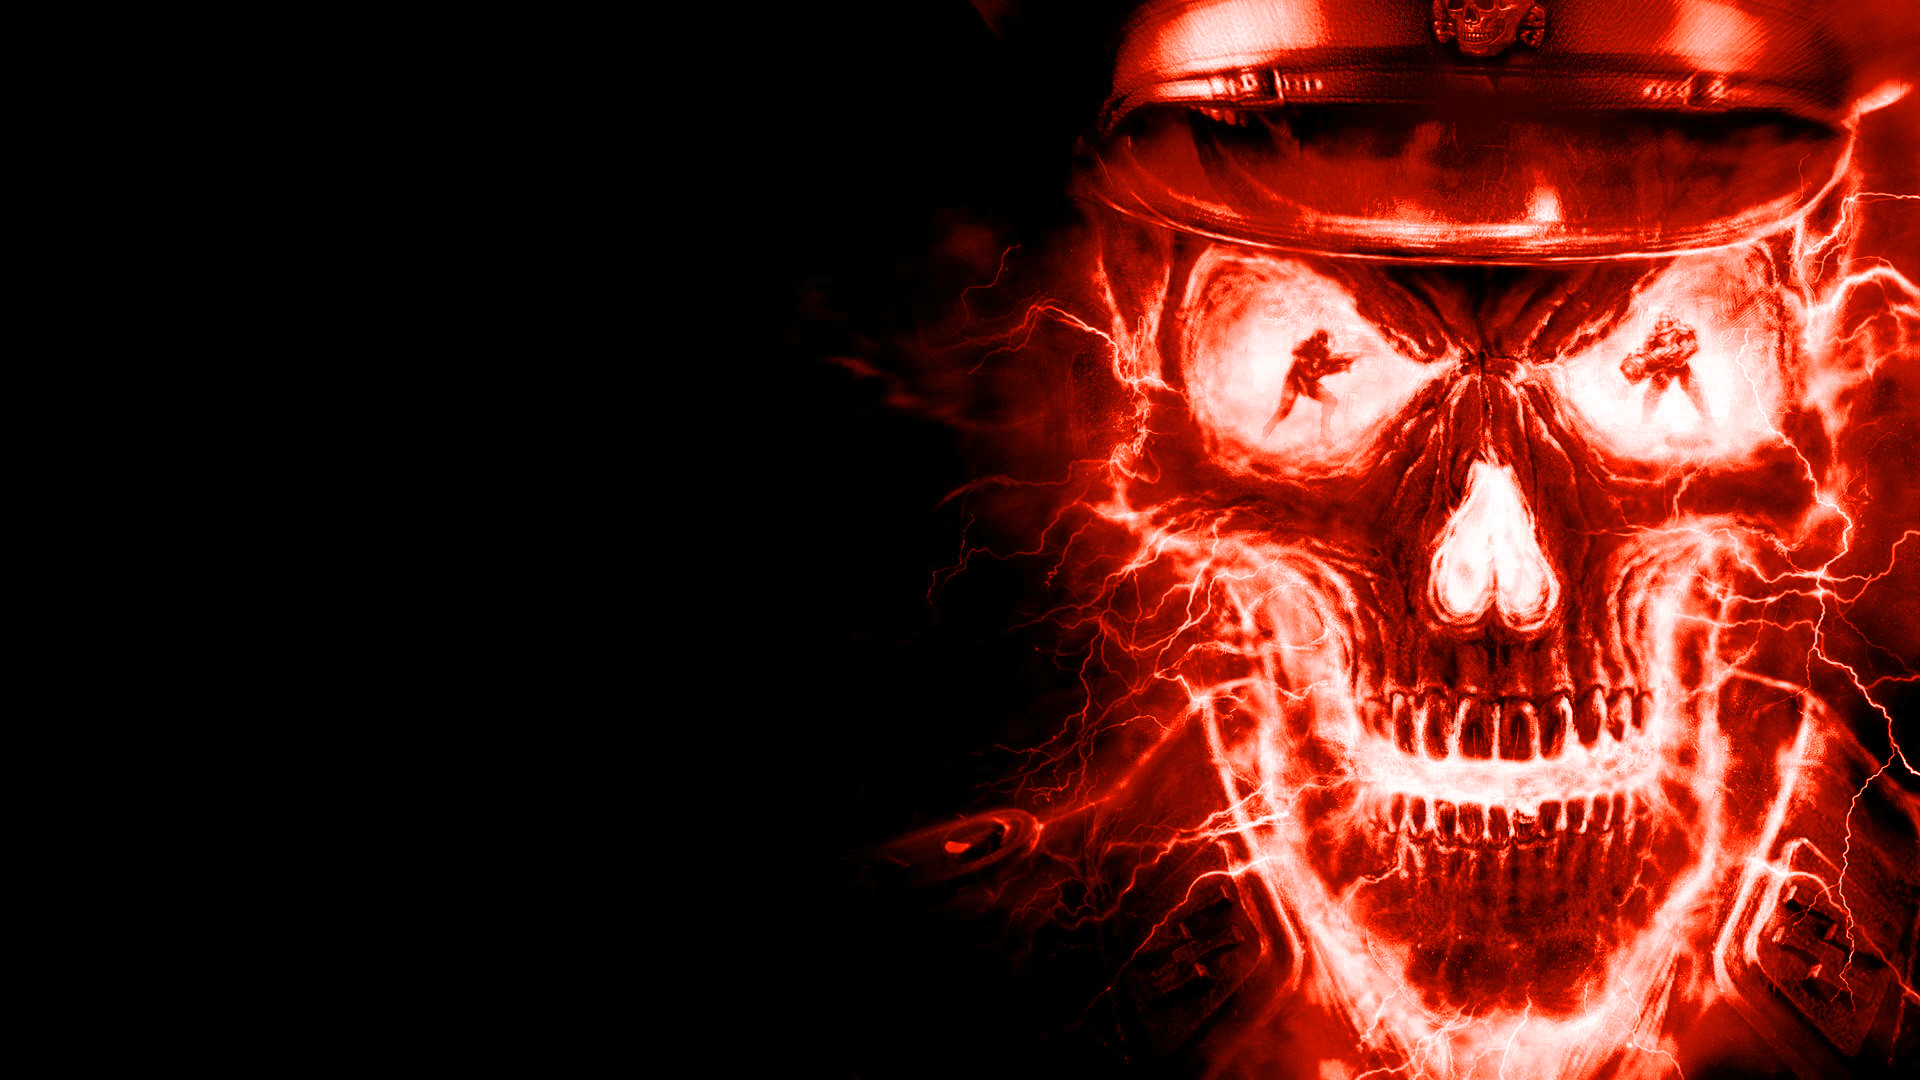 1920x1080 Red Skulls On Fire Photo, fire skull texture